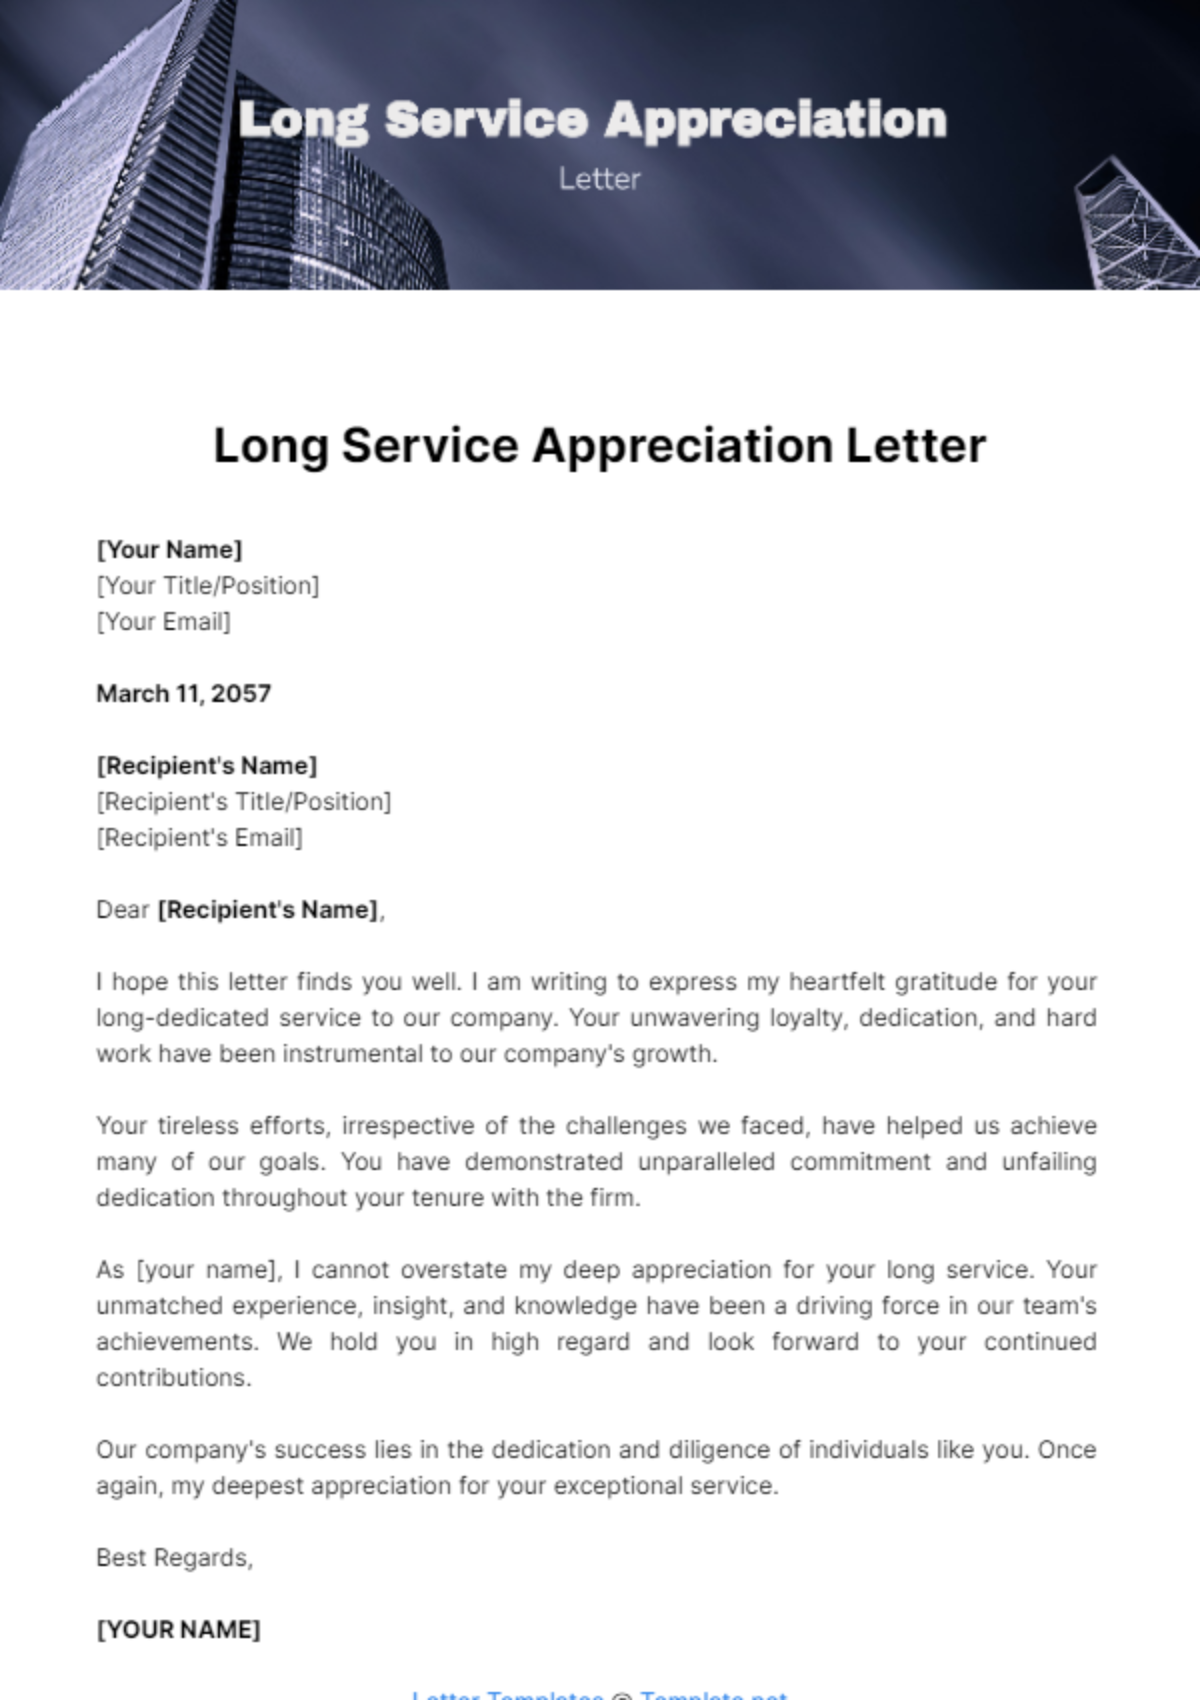 Long Service Appreciation Letter Template